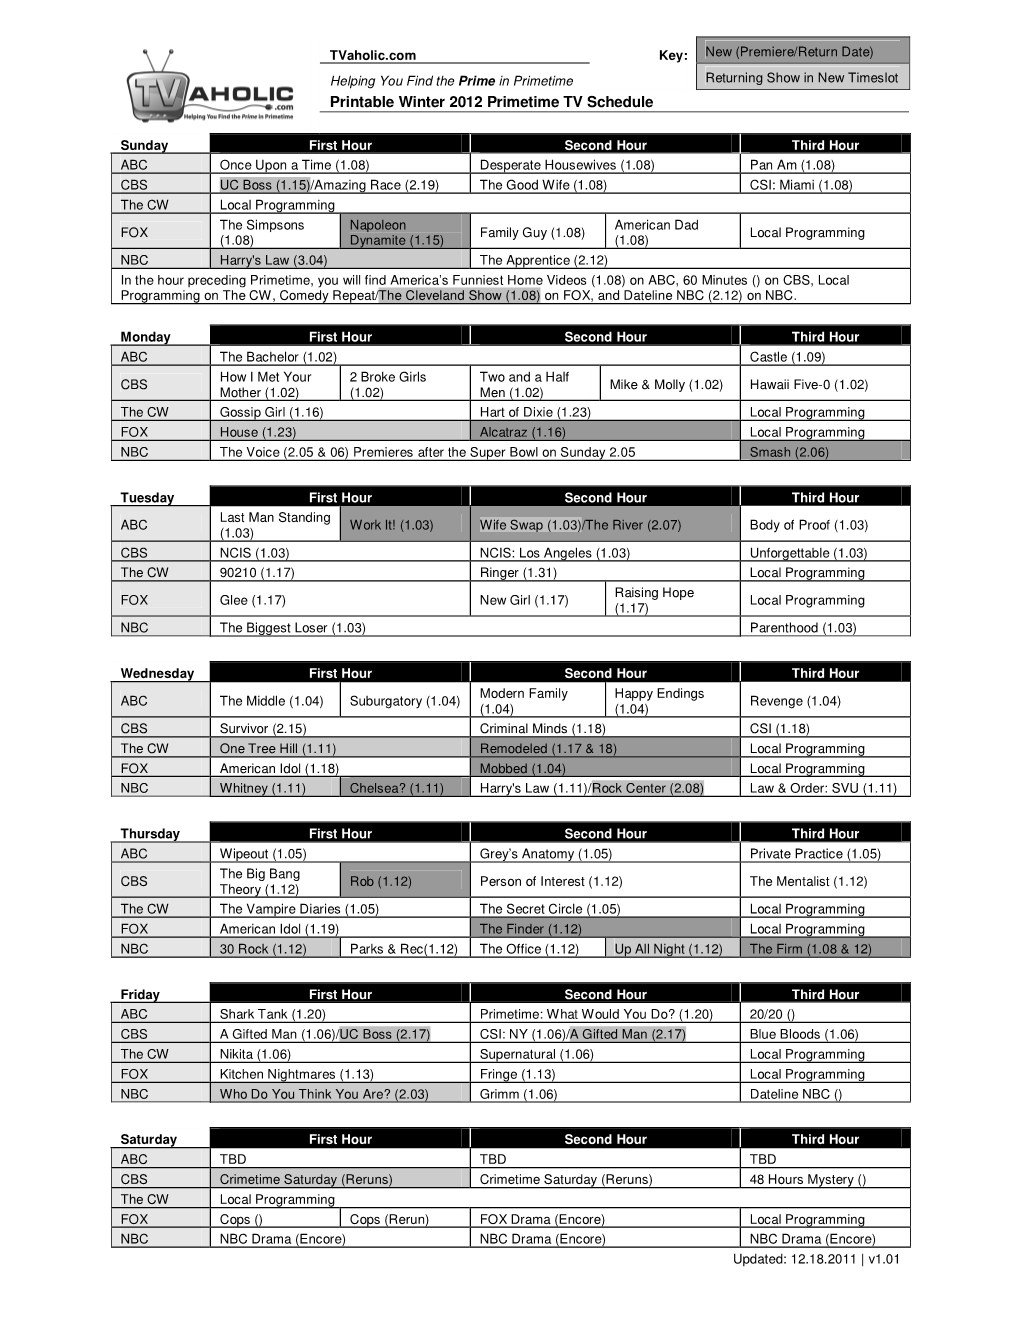 Printable Winter 2012 Primetime TV Schedule